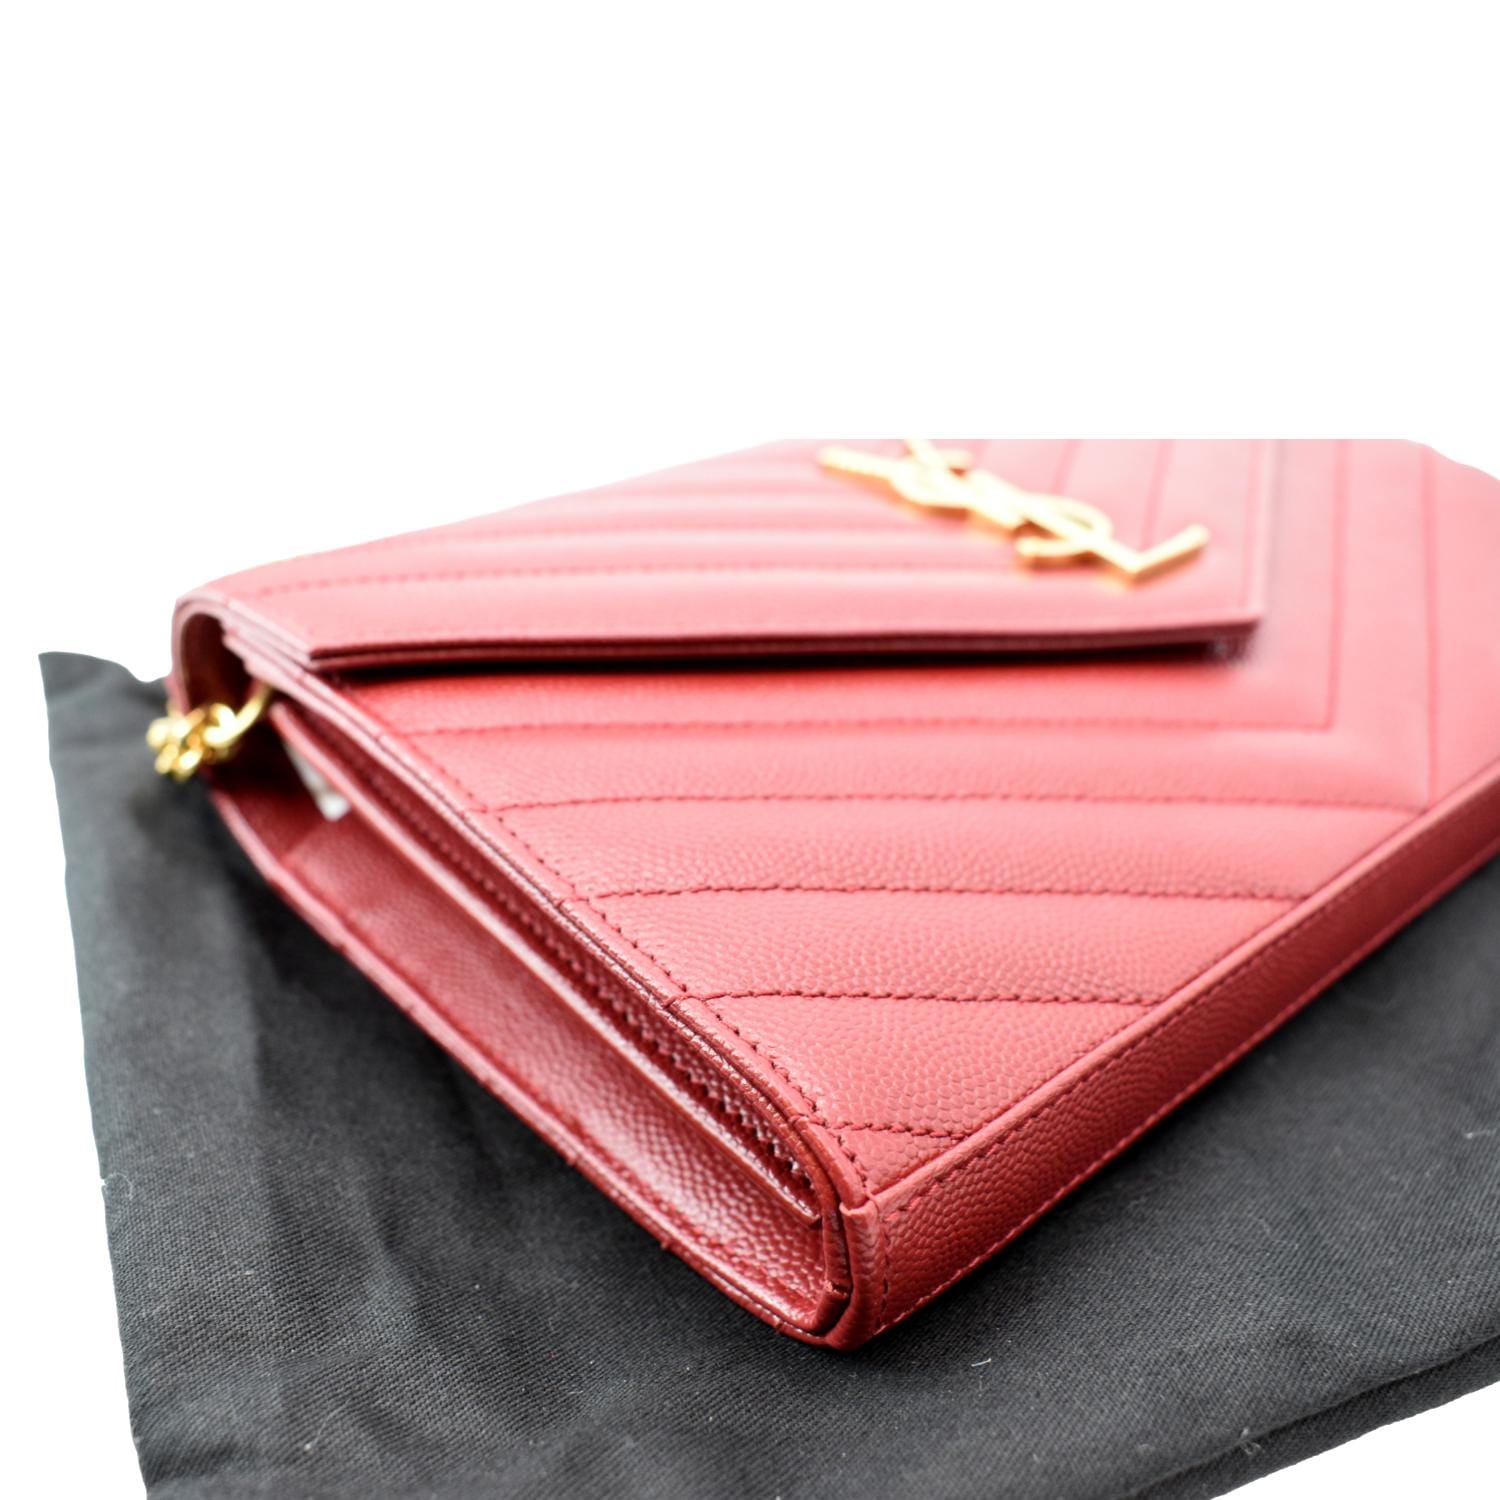 Yves Saint Laurent Embossed Leather Wallet on Chain Shoulder Bag Red